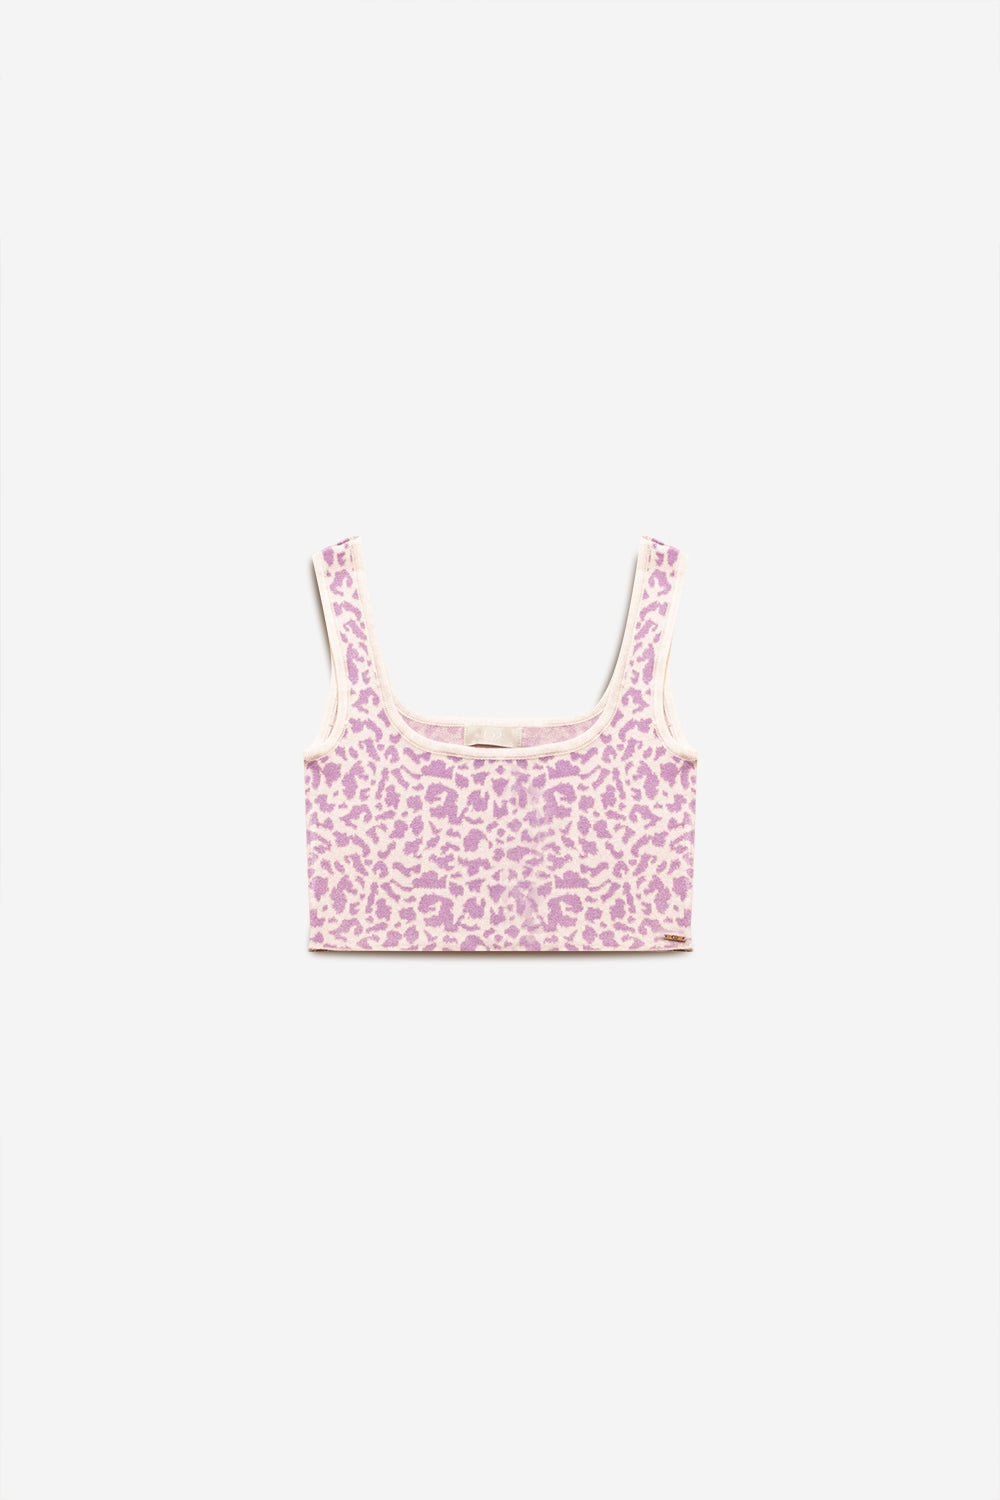 Lightweight knit top in lilac animal print - Szua Store